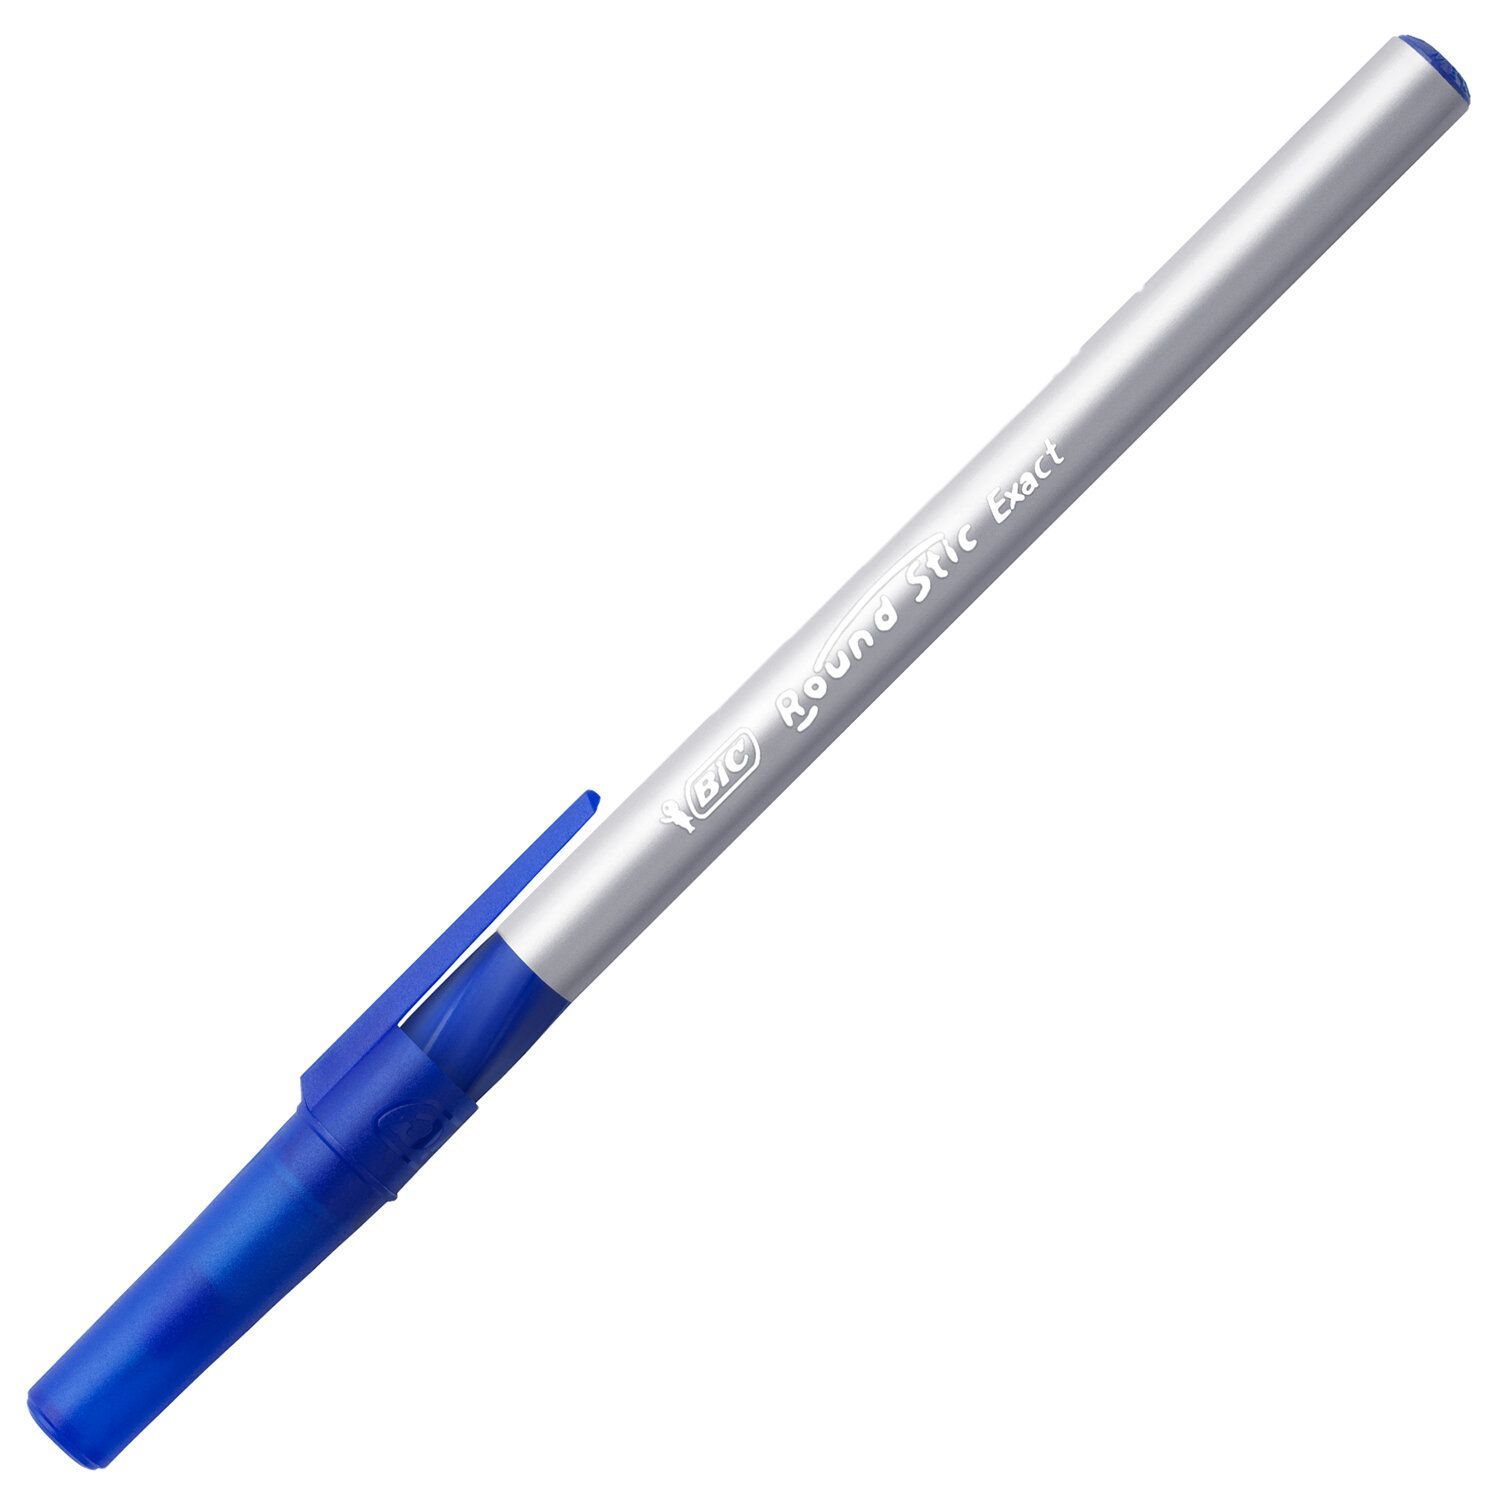 Ручка шариковая одноразовая BIC Round Stic exact синяя (толщина линии 0.35 мм). -Ручка BIC Round Stic exact 0,28мм синяя блистер (4шт). Ручка BIC 0.7. Ручка шариковая неавтоматическая BIC раунд стик Экзакт синяя, 918543 0,28мм. Ручка шариковая bic round stic